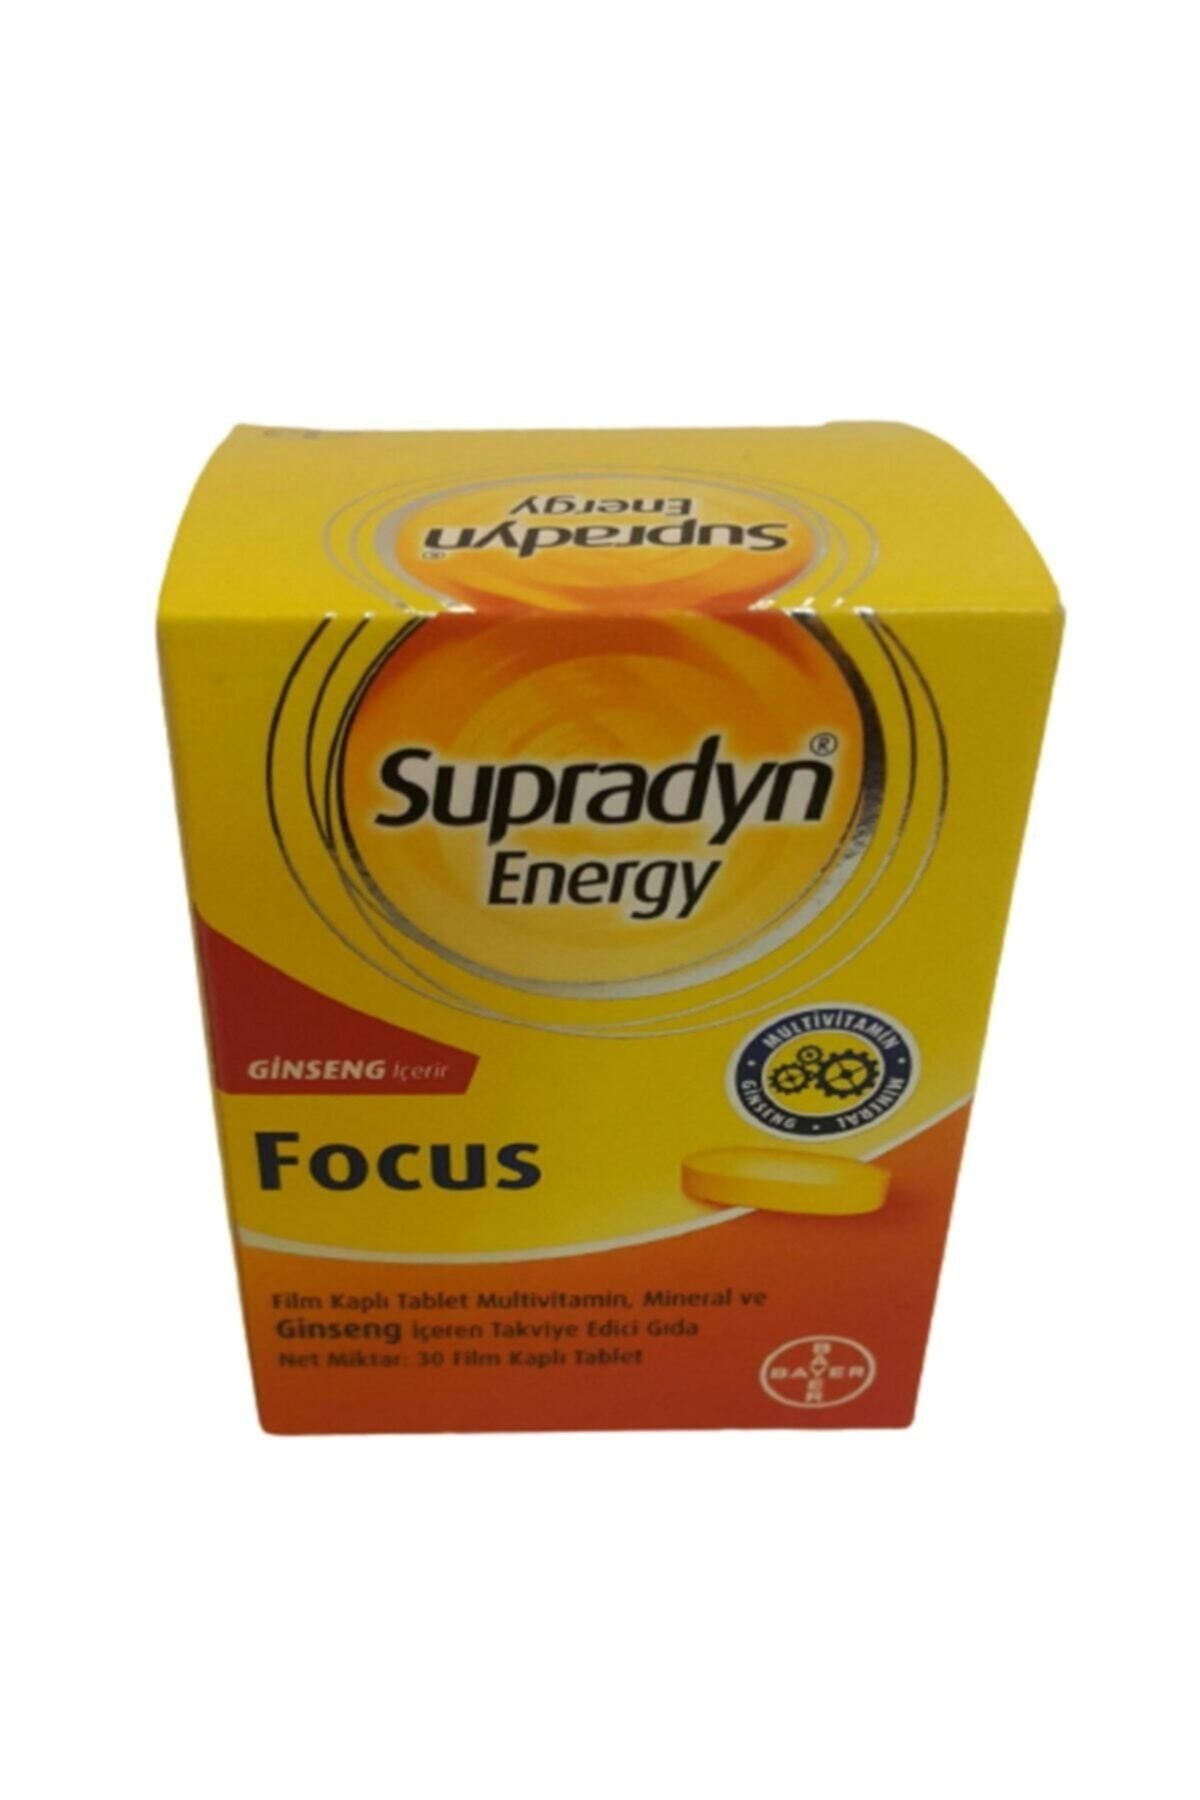 Supradyn Energy Focus